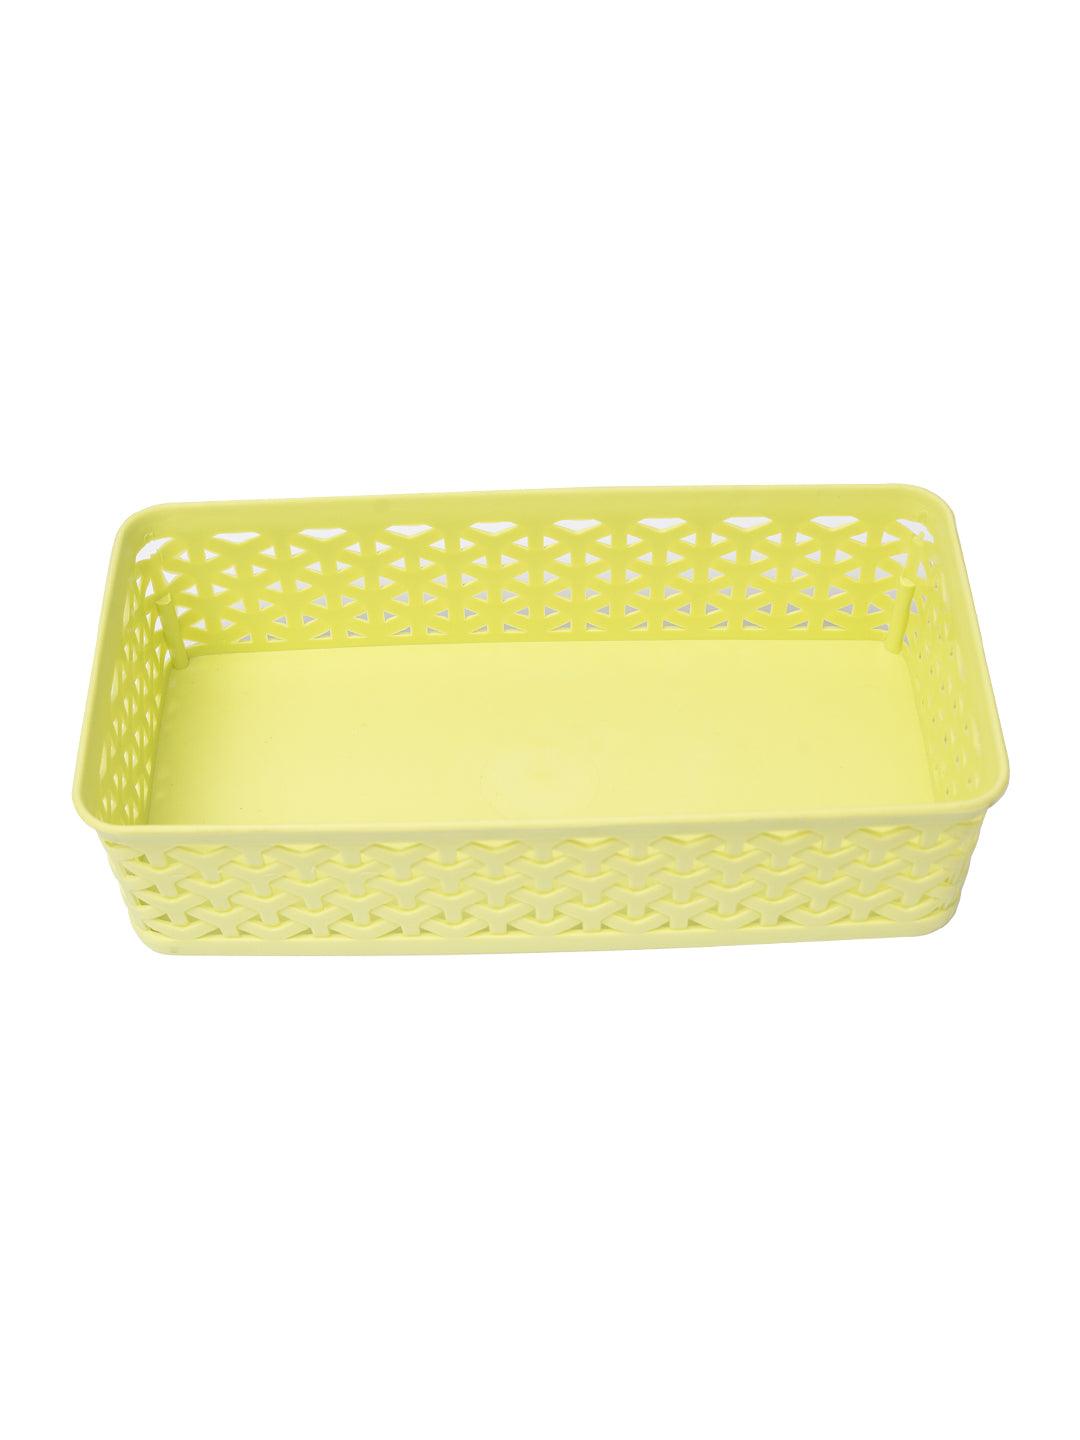 Market 99 Medium Plastic Multipurpose Storage Basket ( Set Of 4, Solid Green Colour) - MARKET 99